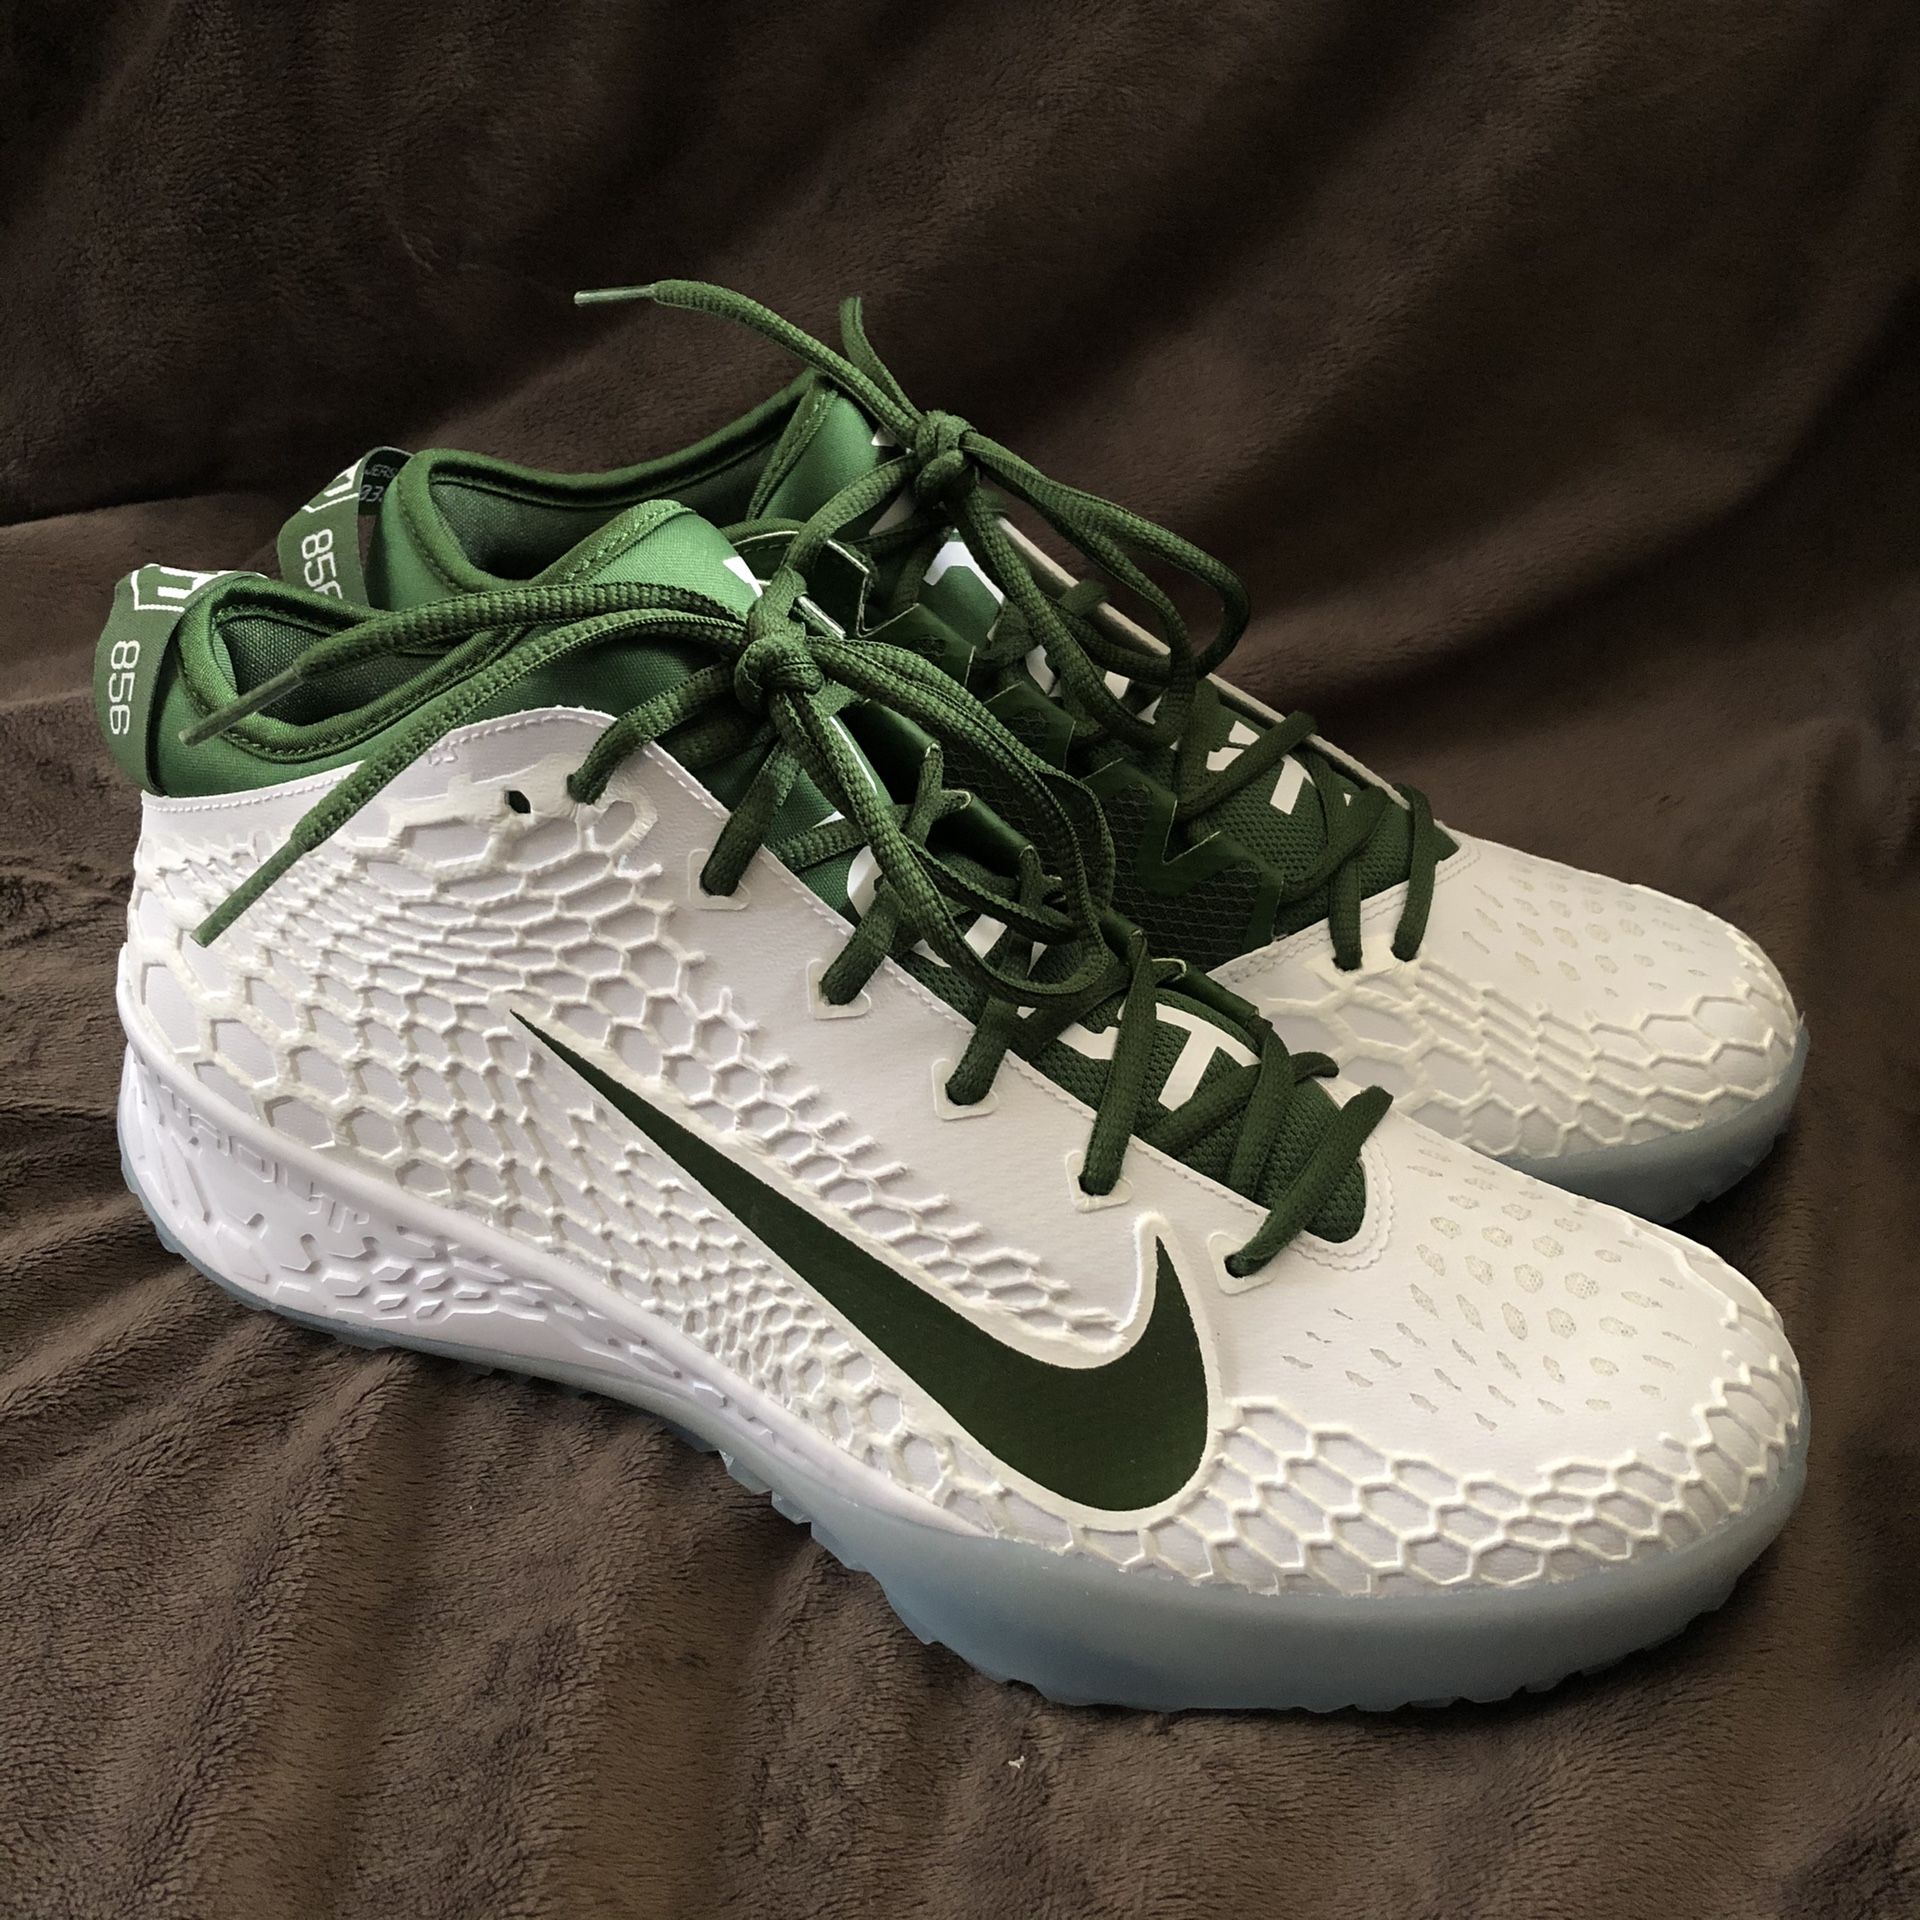 Nike Zoom Force Trout 5 Turf Size 12 Baseball Shoes BQ5556-301 Green / White